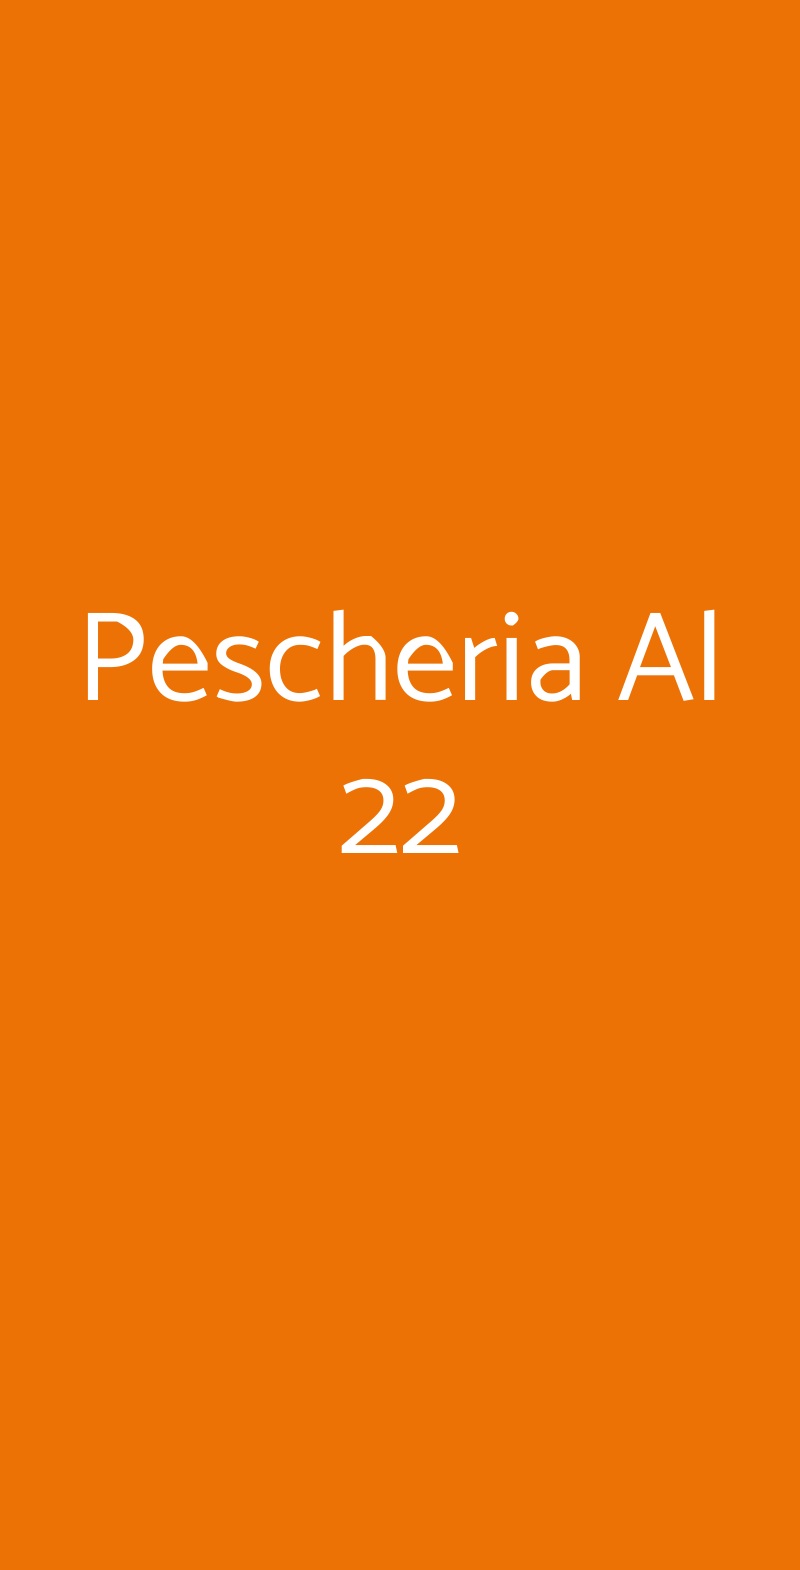 Pescheria Al 22 Milano menù 1 pagina